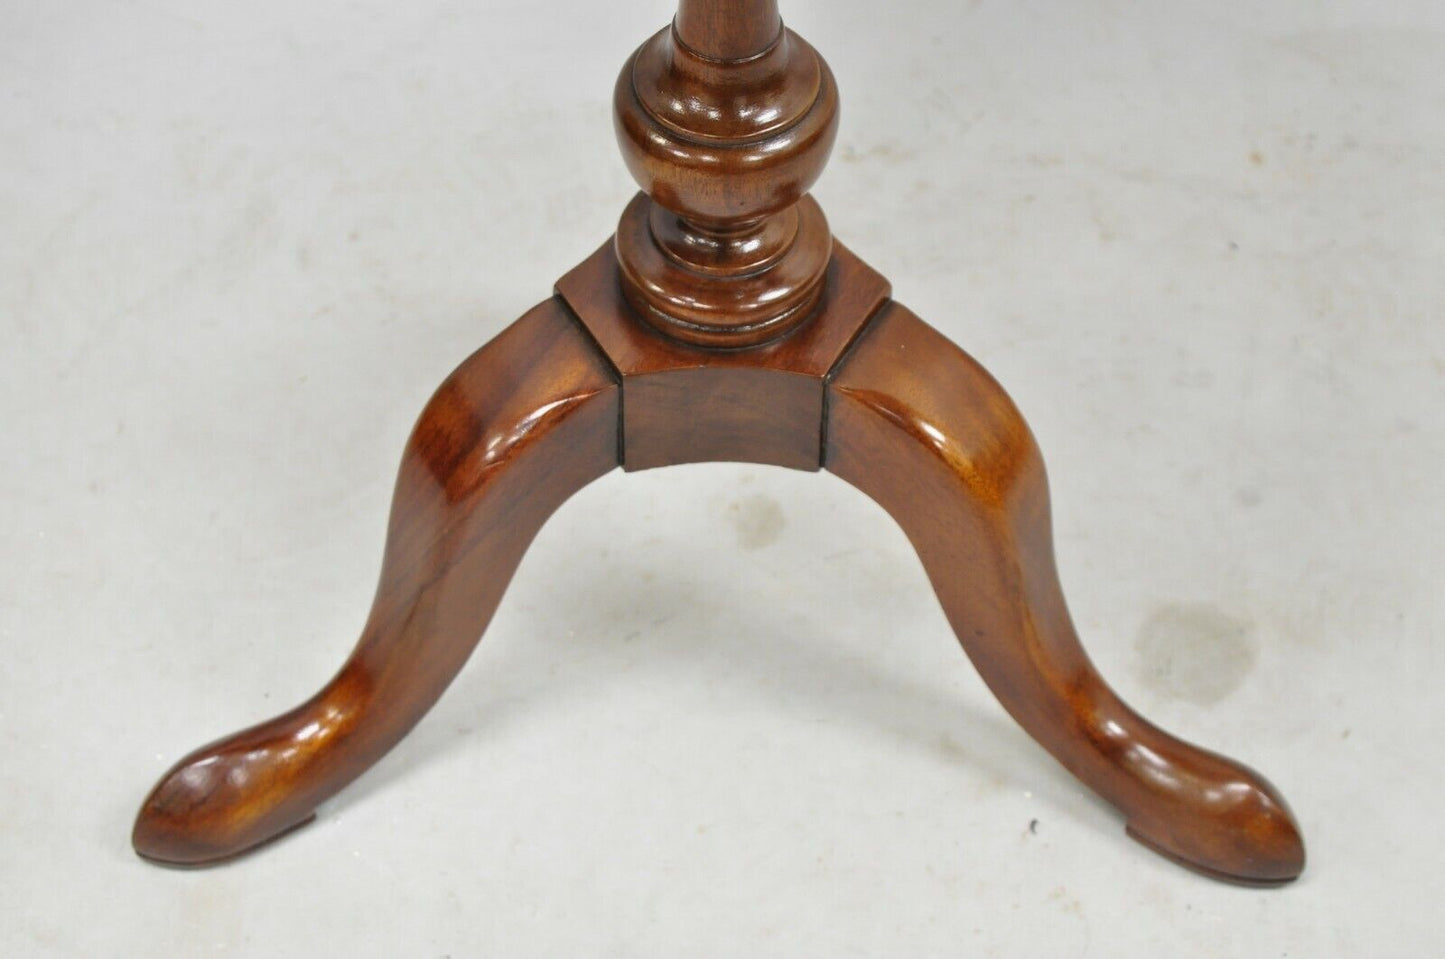 Vintage Solid Cherry Wood Queen Anne Pedestal Base  16.5" Round Lamp Tea Table